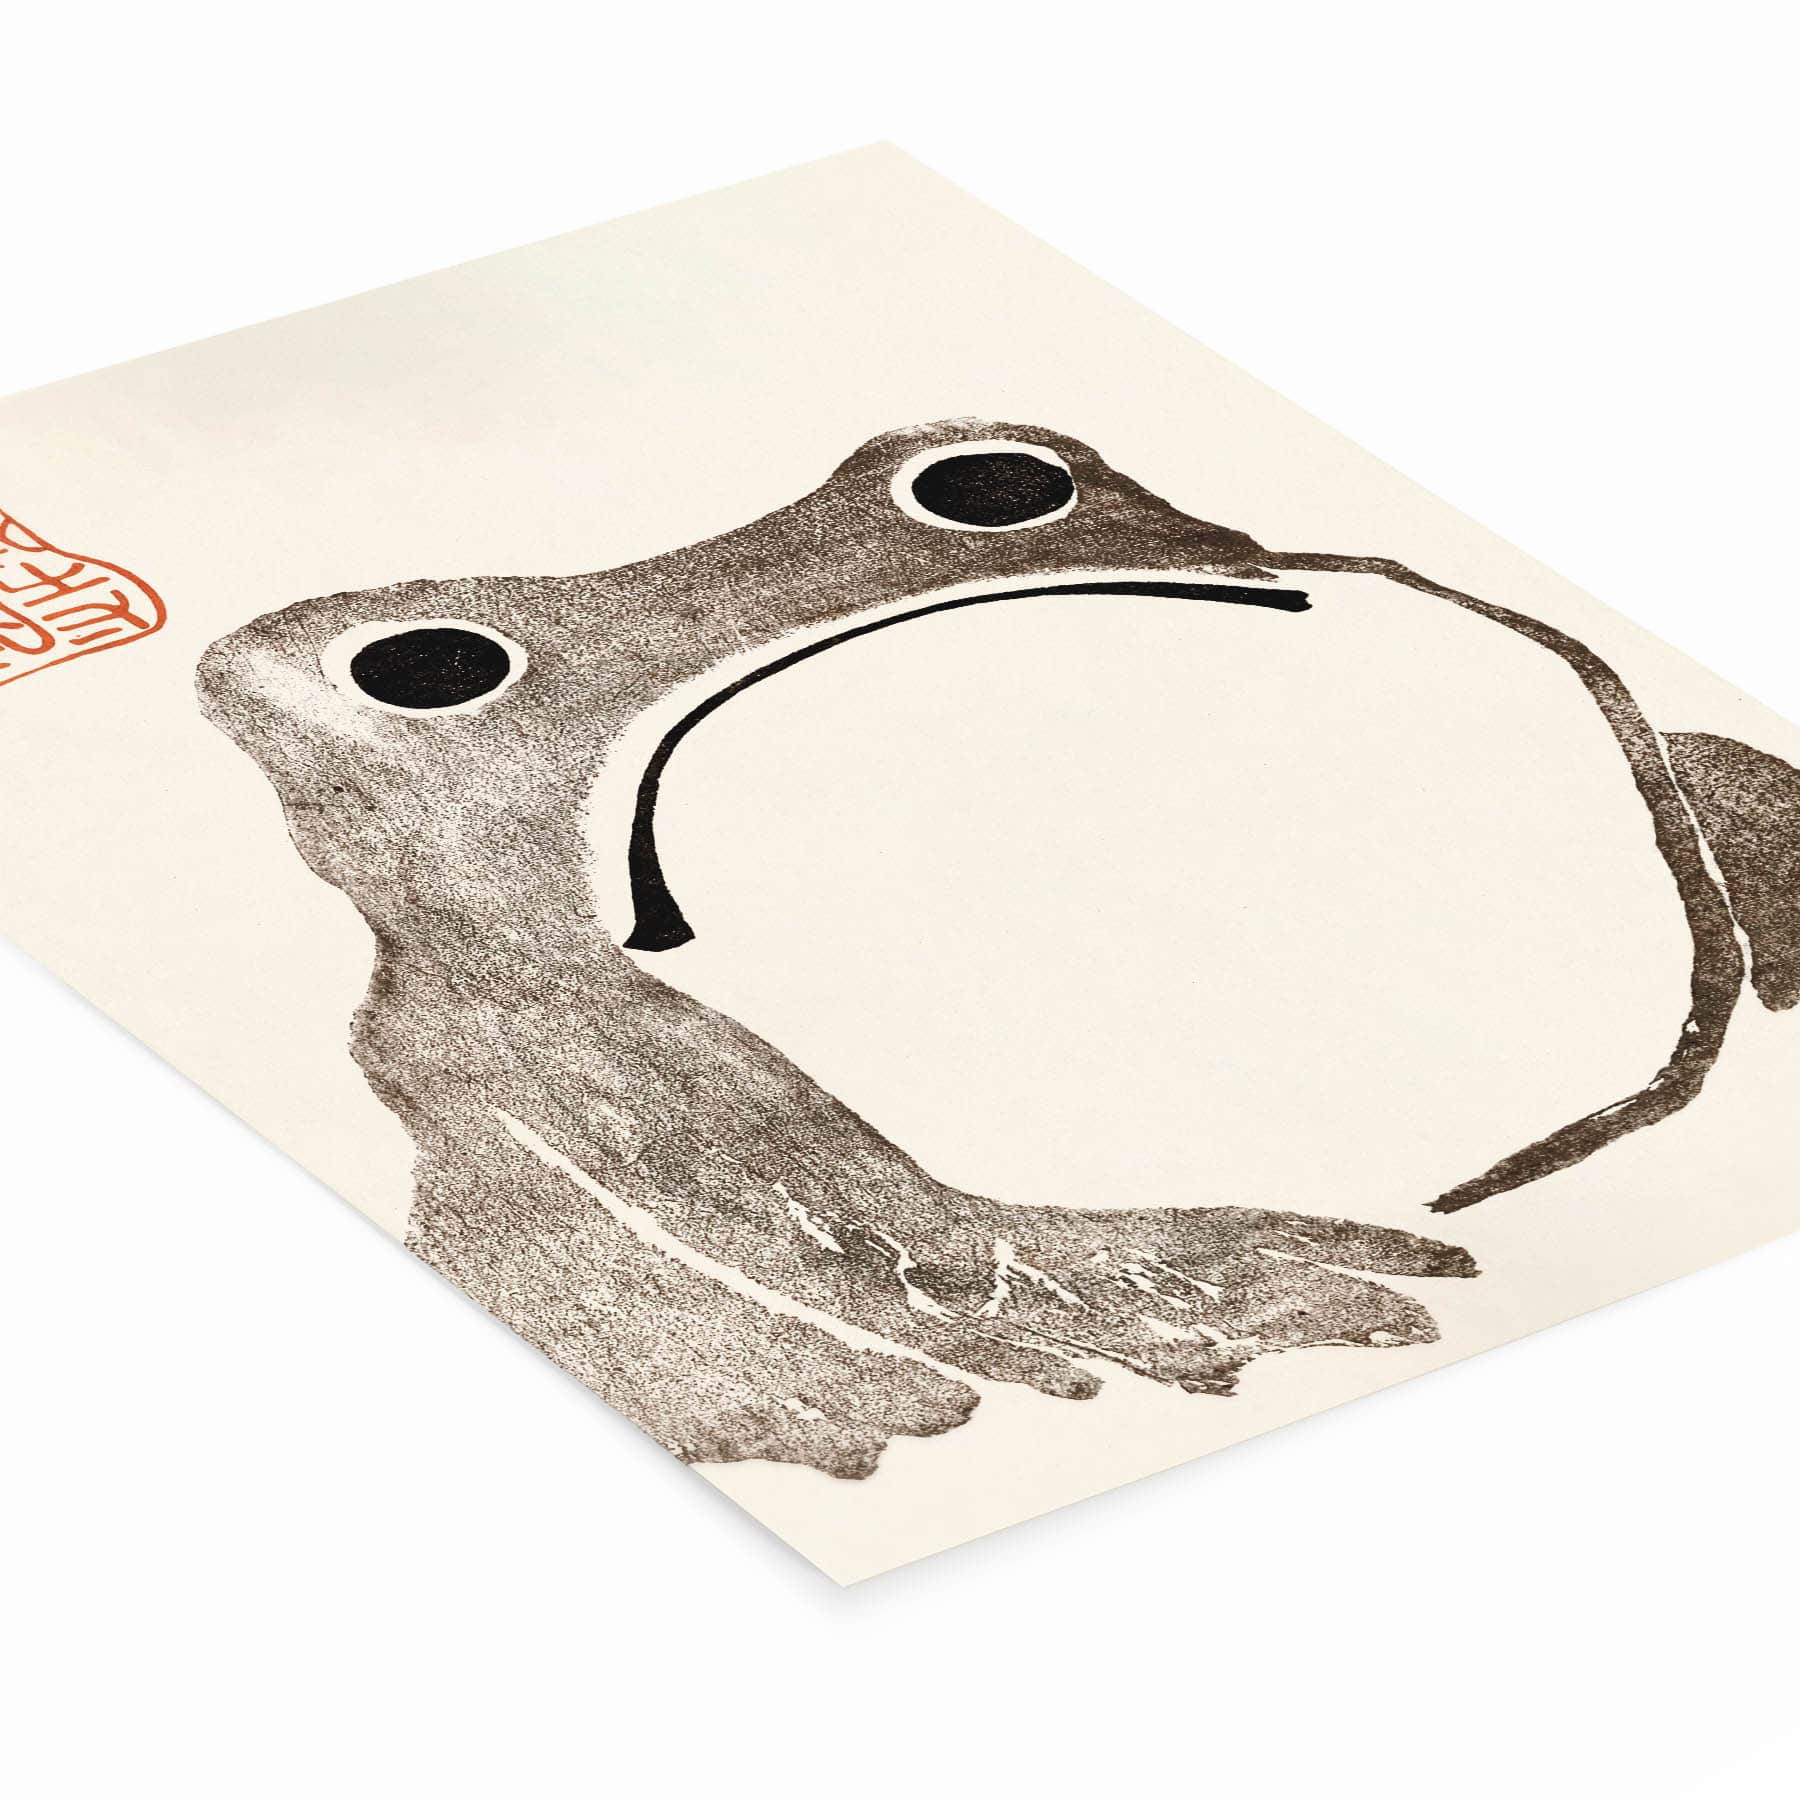 Grumpy Frog Art Print Laying Flat on a White Background